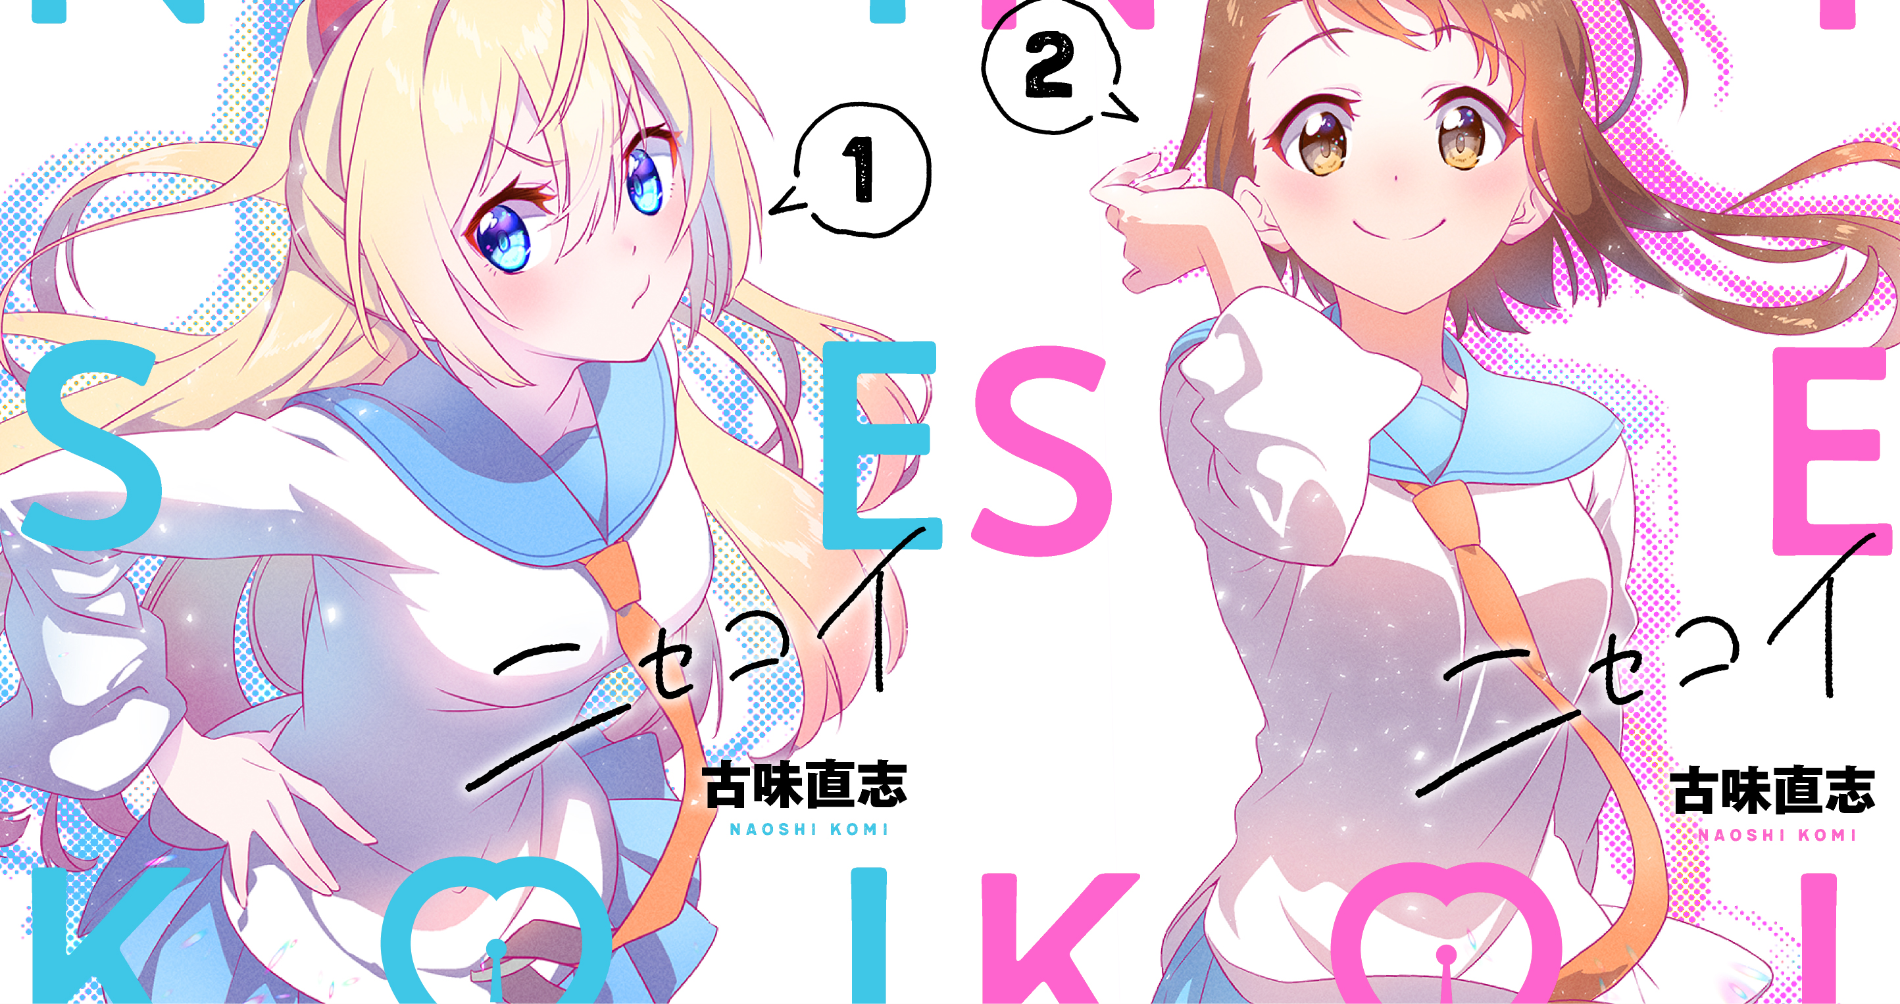 Nisekoi manga gets a sequel Expected Plot  release dates